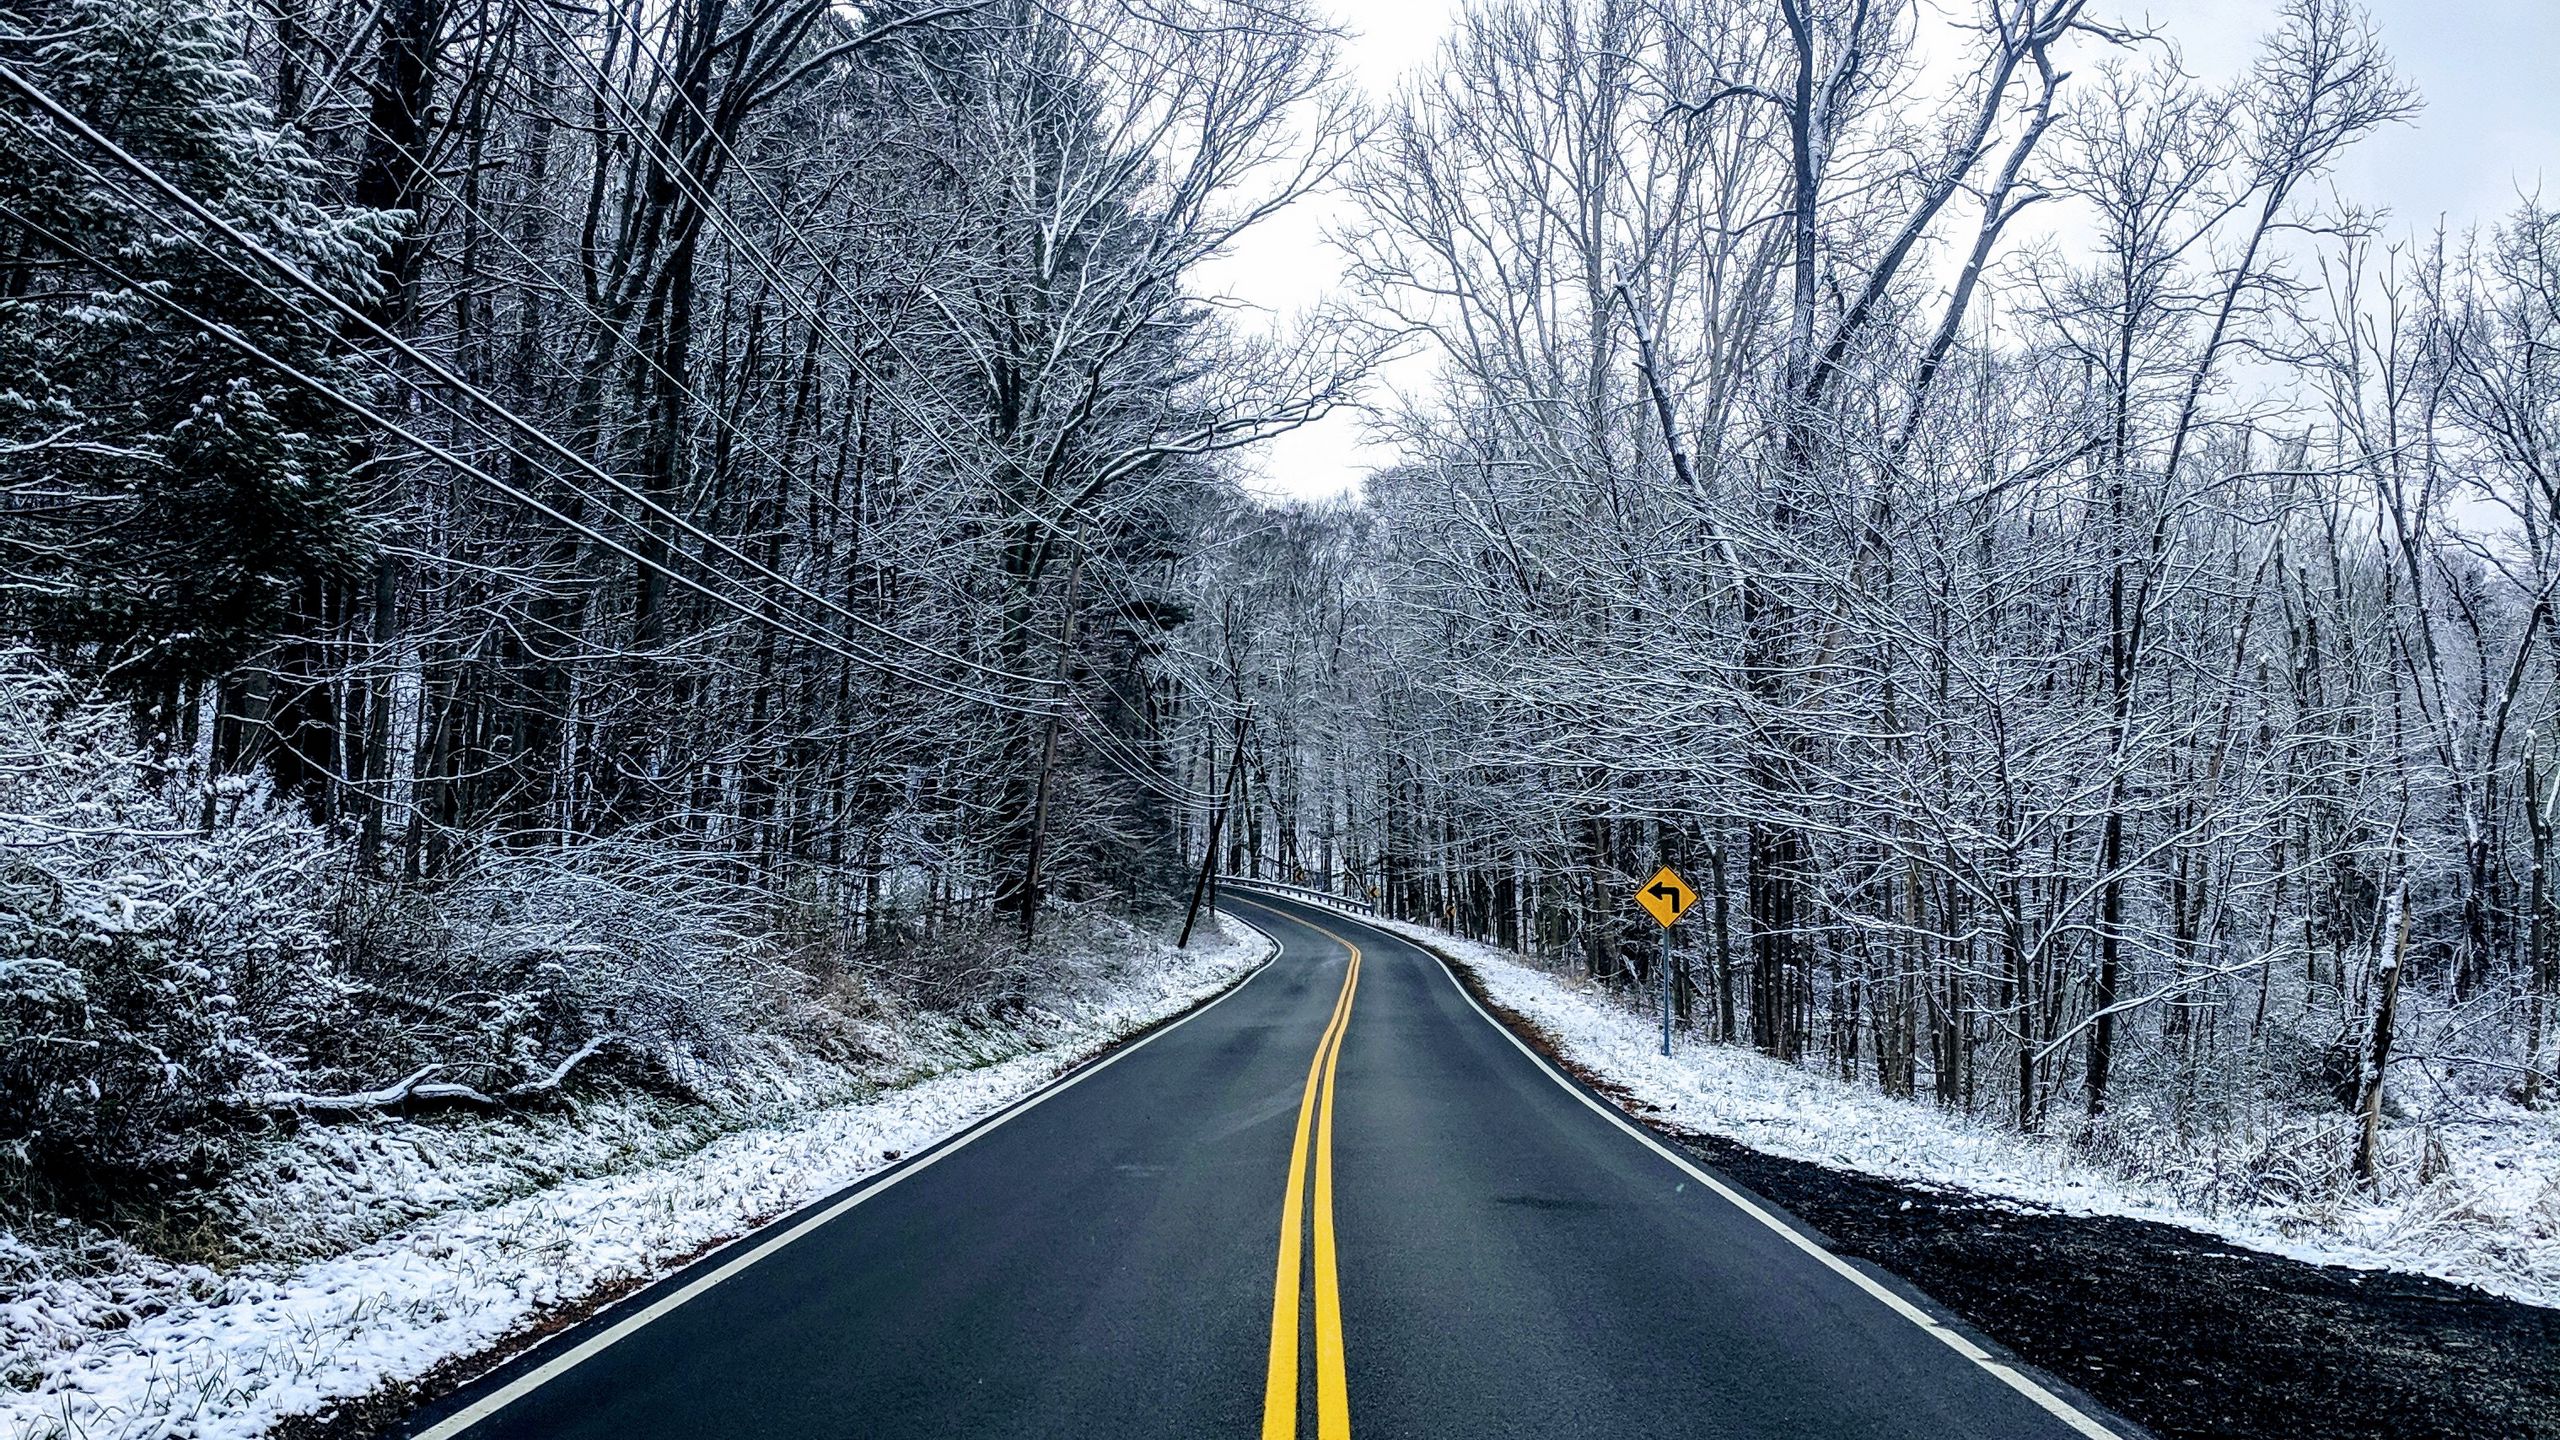 Download wallpaper 2560x1440 road, trees, winter, marking, snow, asphalt  widescreen 16:9 hd background